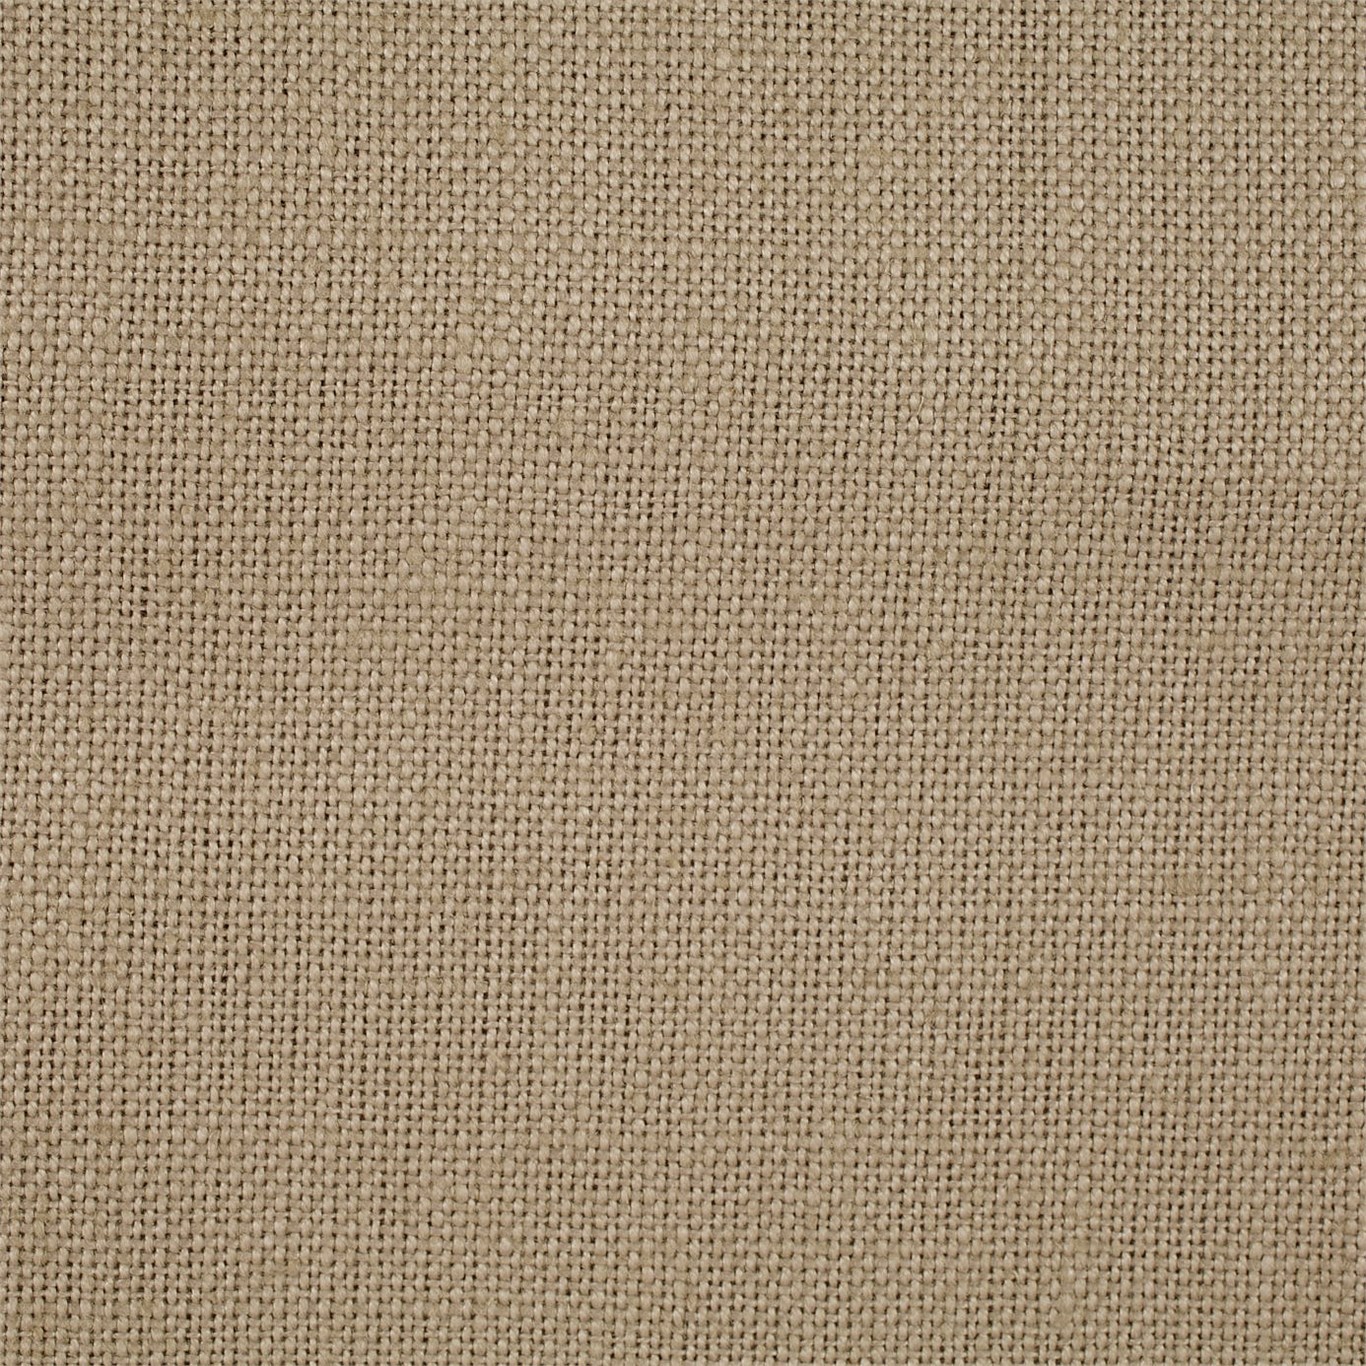 Malbec Linen Fabric by SAN